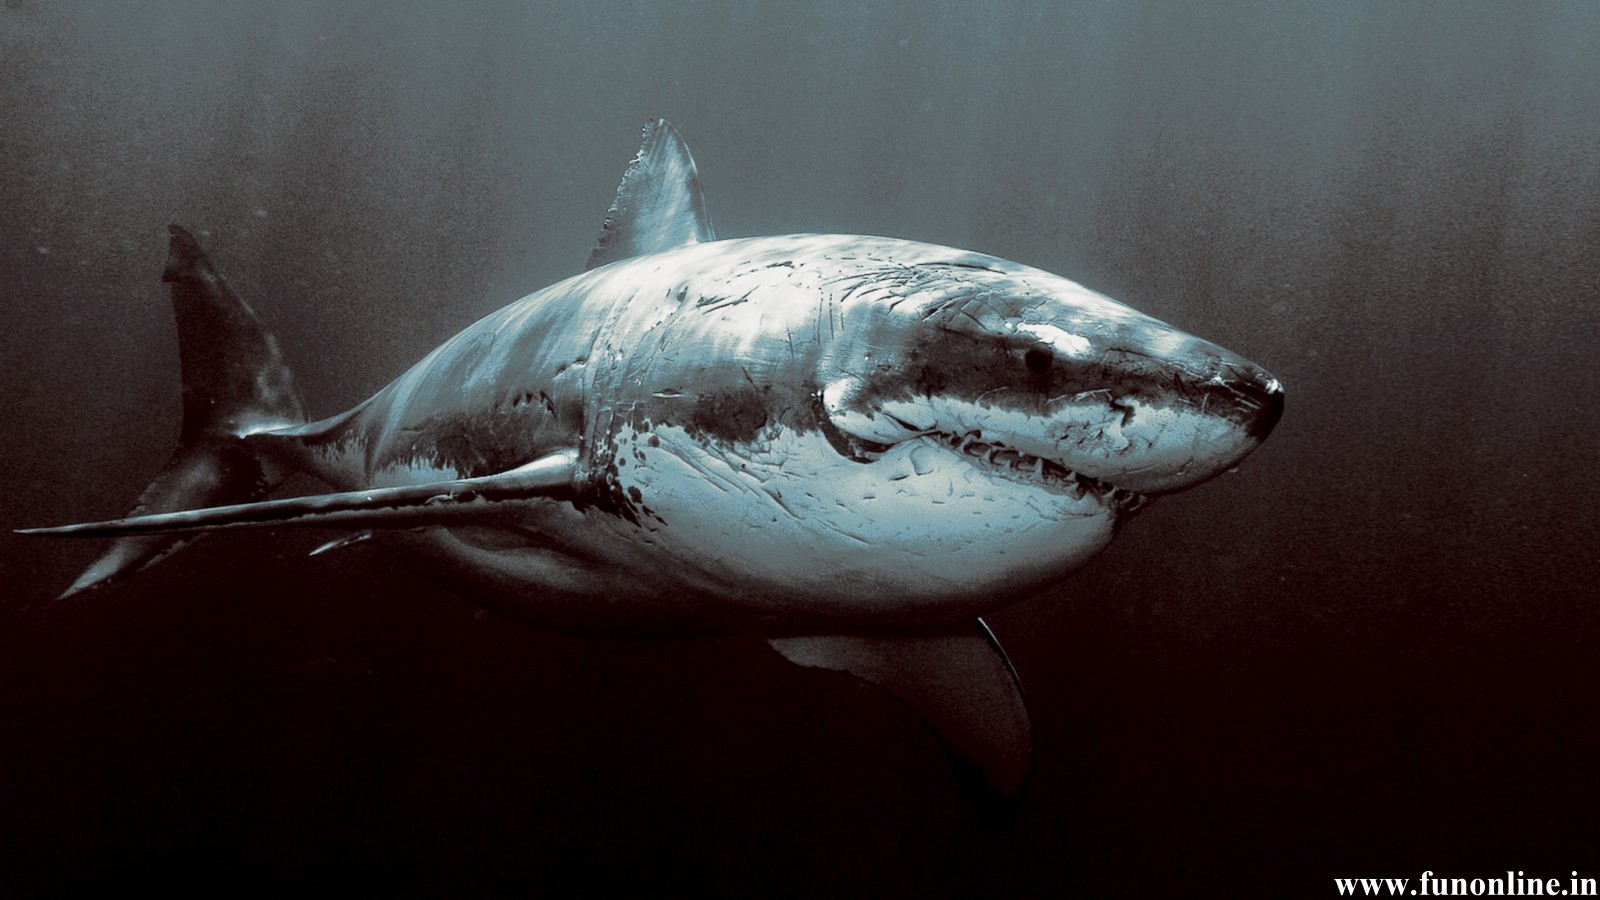 Scary Shark Wallpaper HD In Animals Imageci